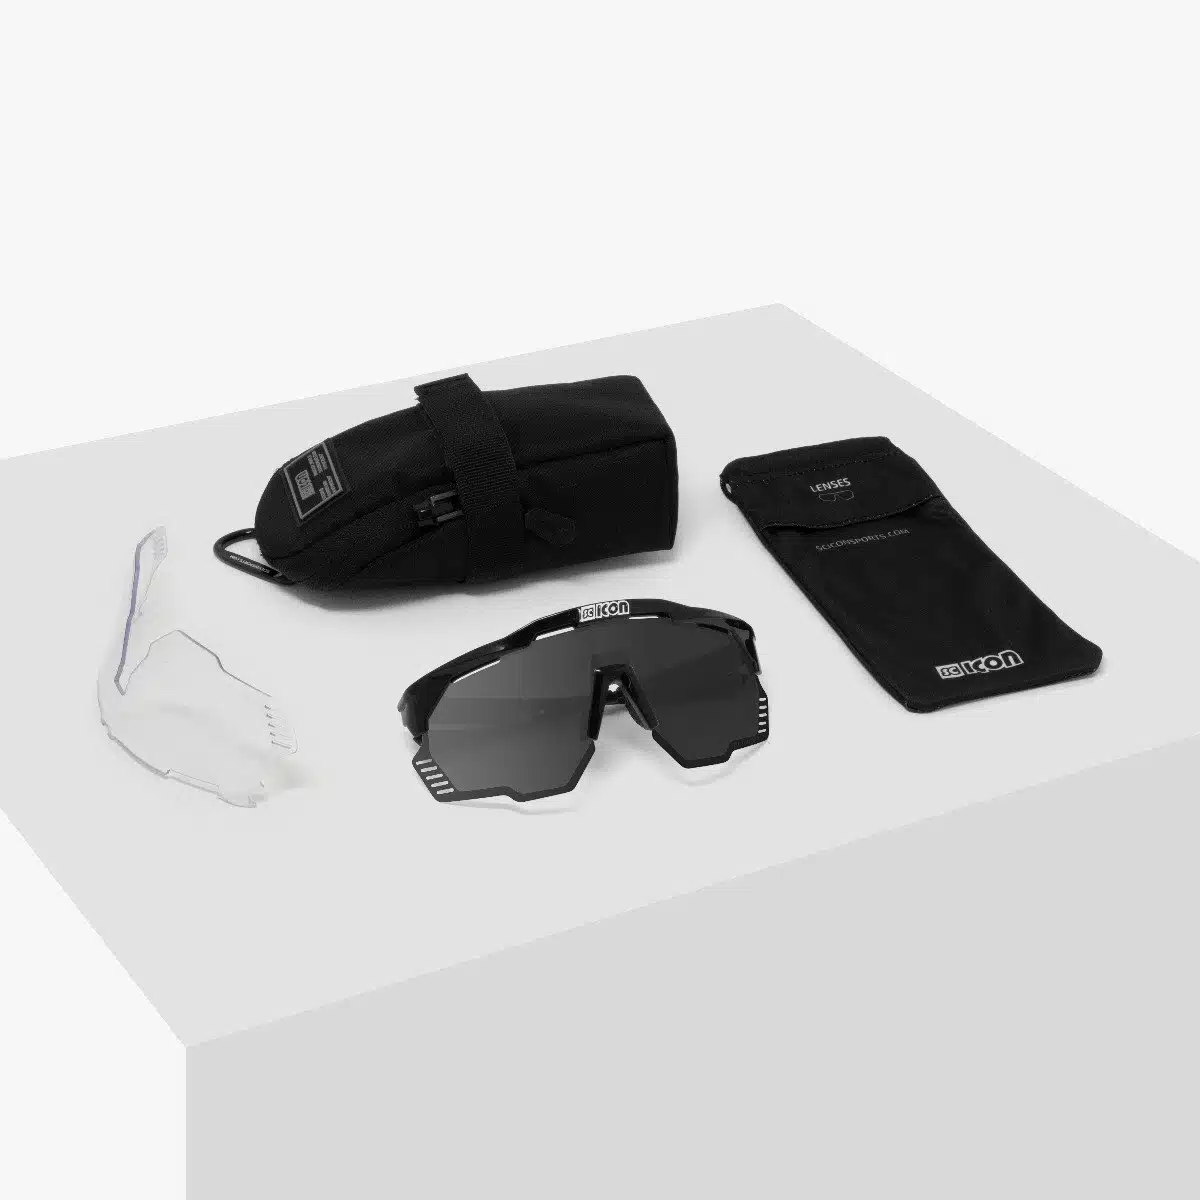 Scicon Aeroshade Kunken sunglasses black multimirror silver on table